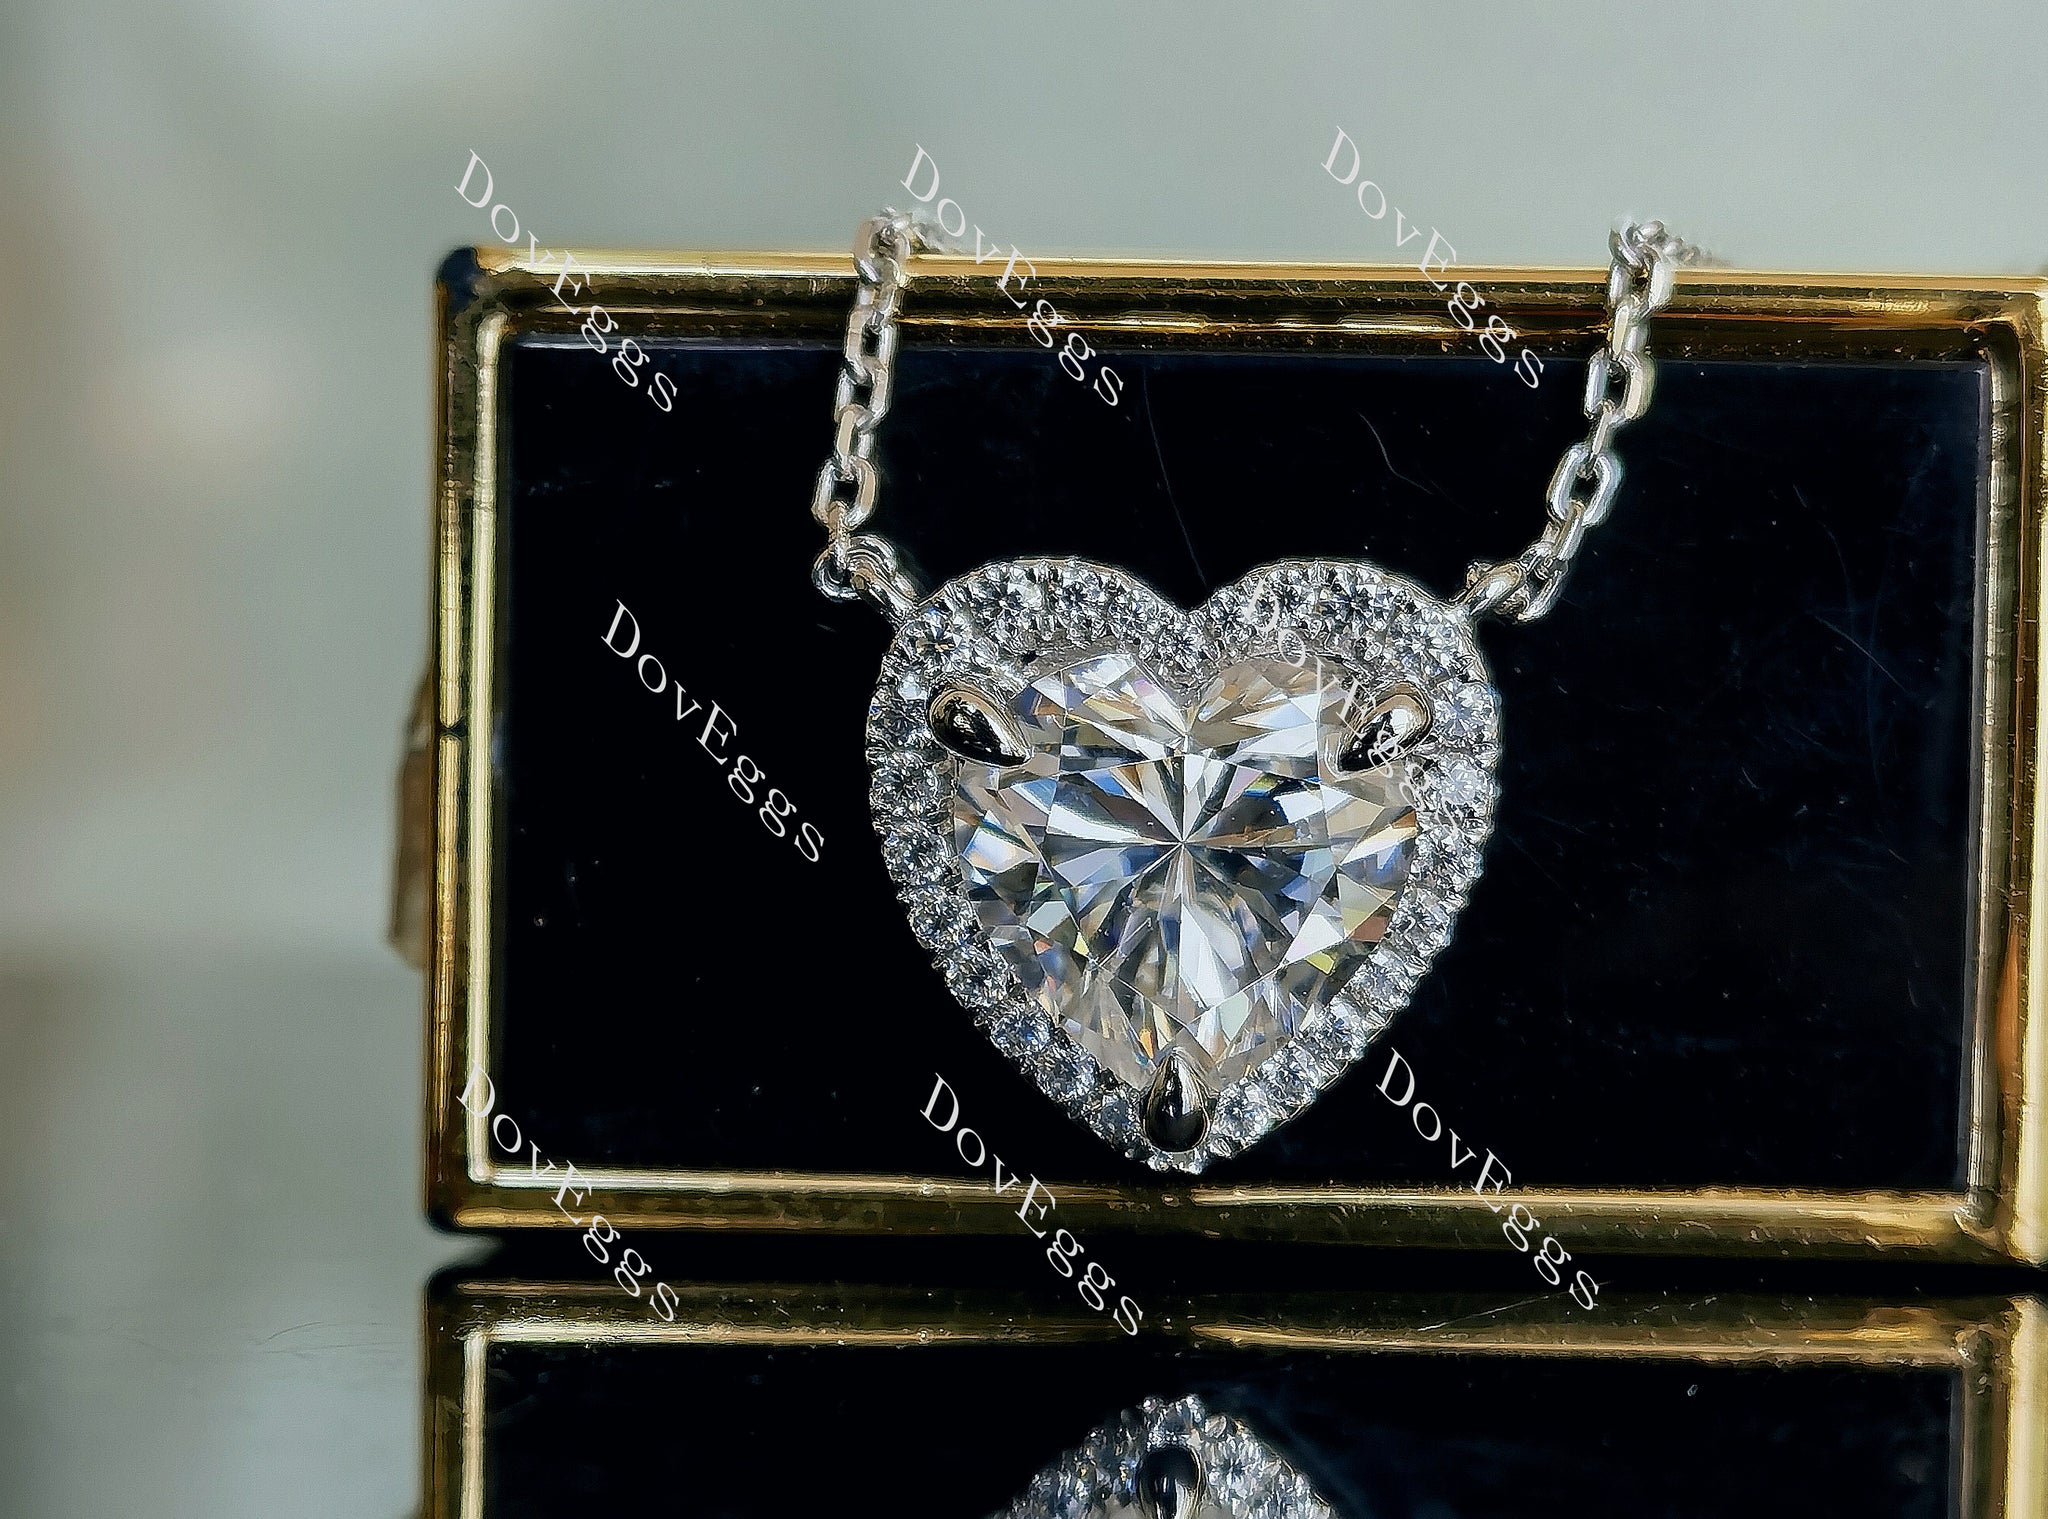 Doveggs heart halo moissanite pendant necklace (with chain)